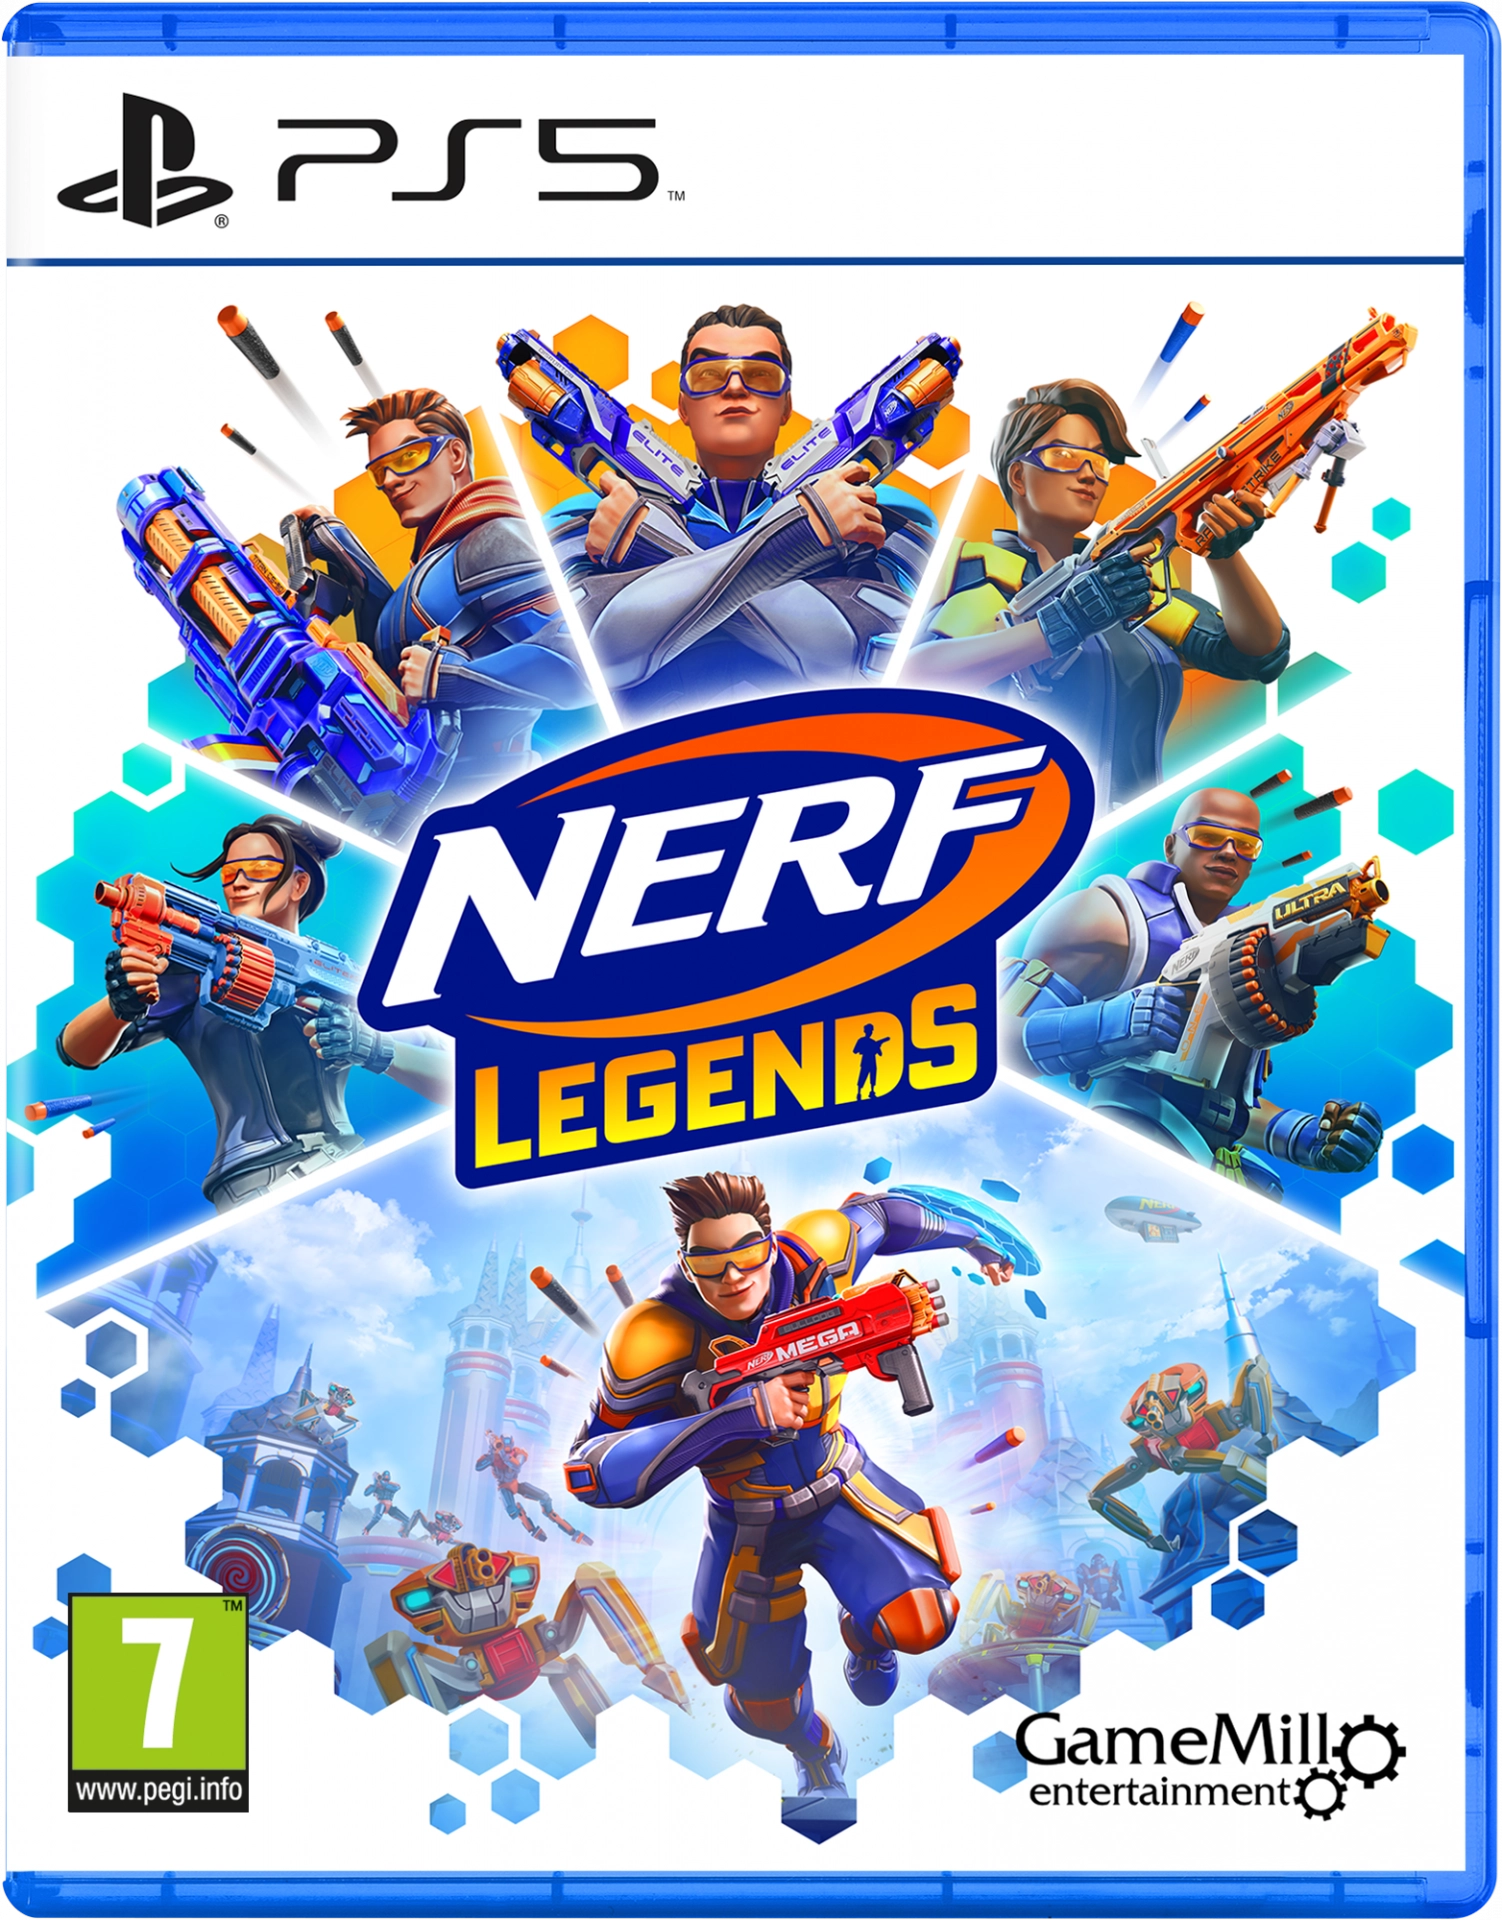 NERF Legends (PS5), GameMill Entertainment